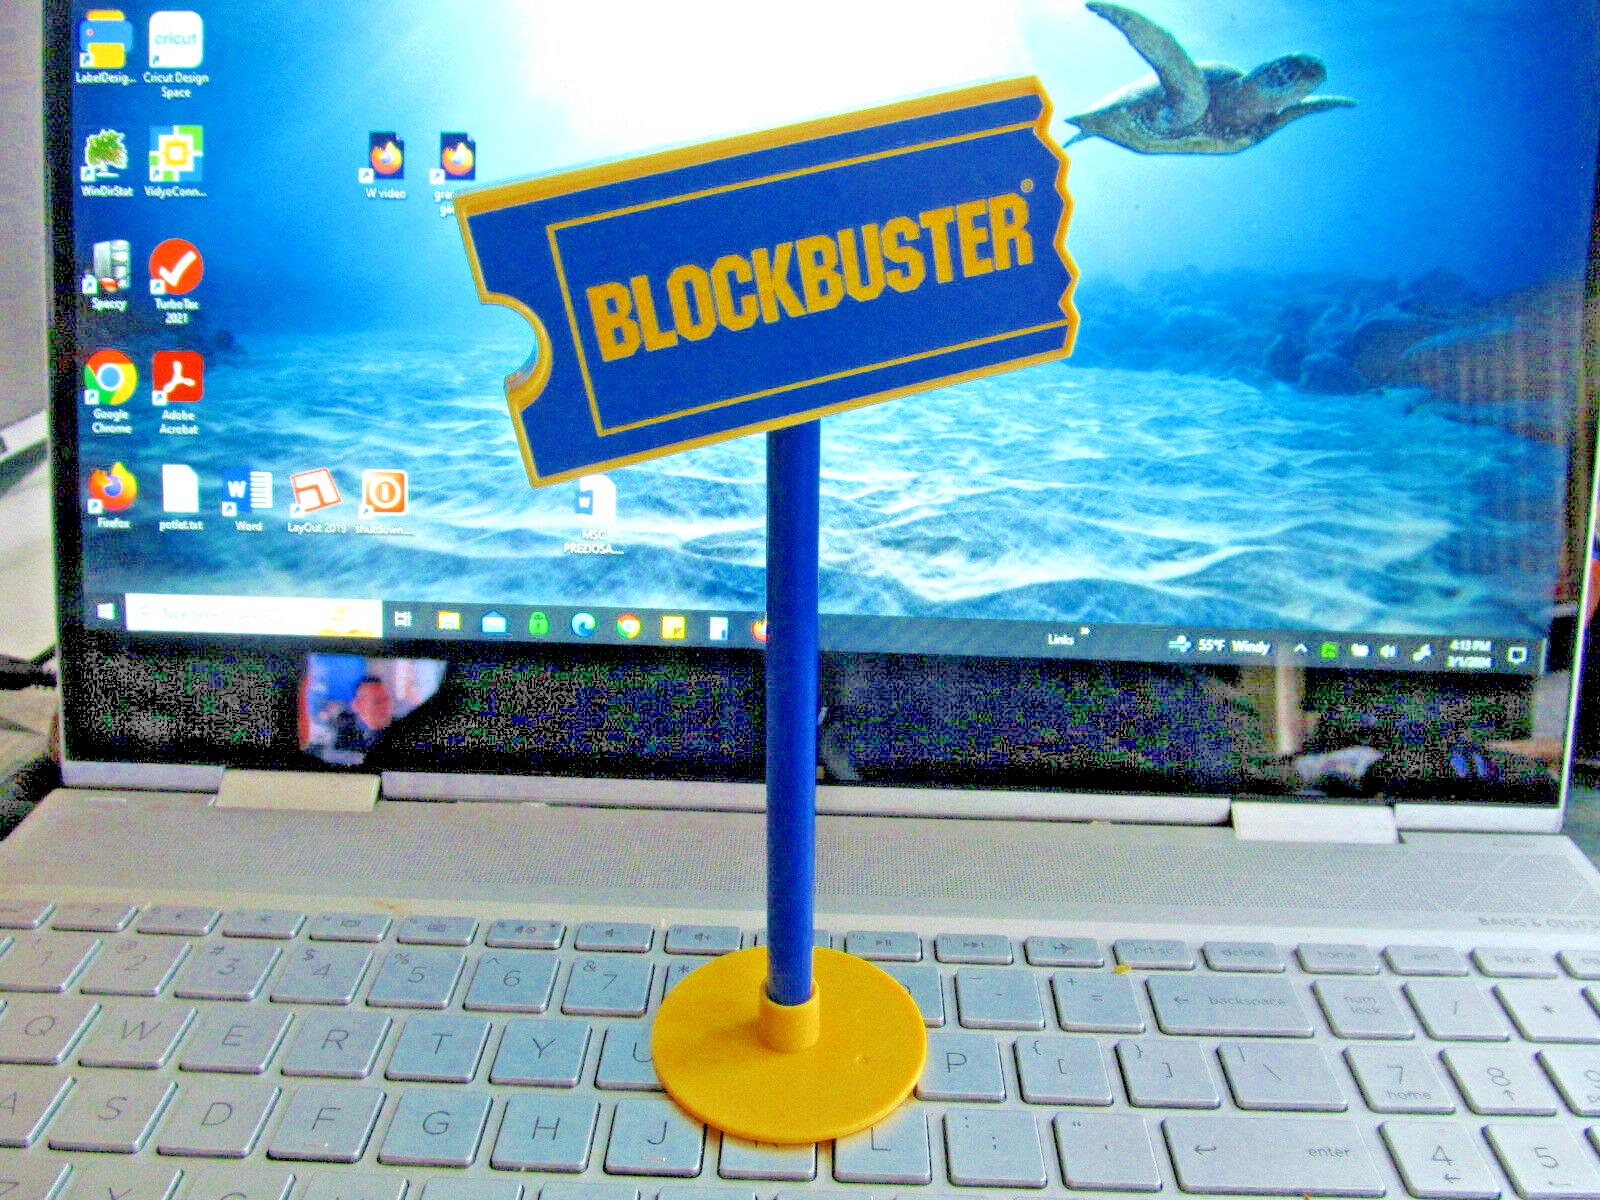 Blockbuster Video Sign